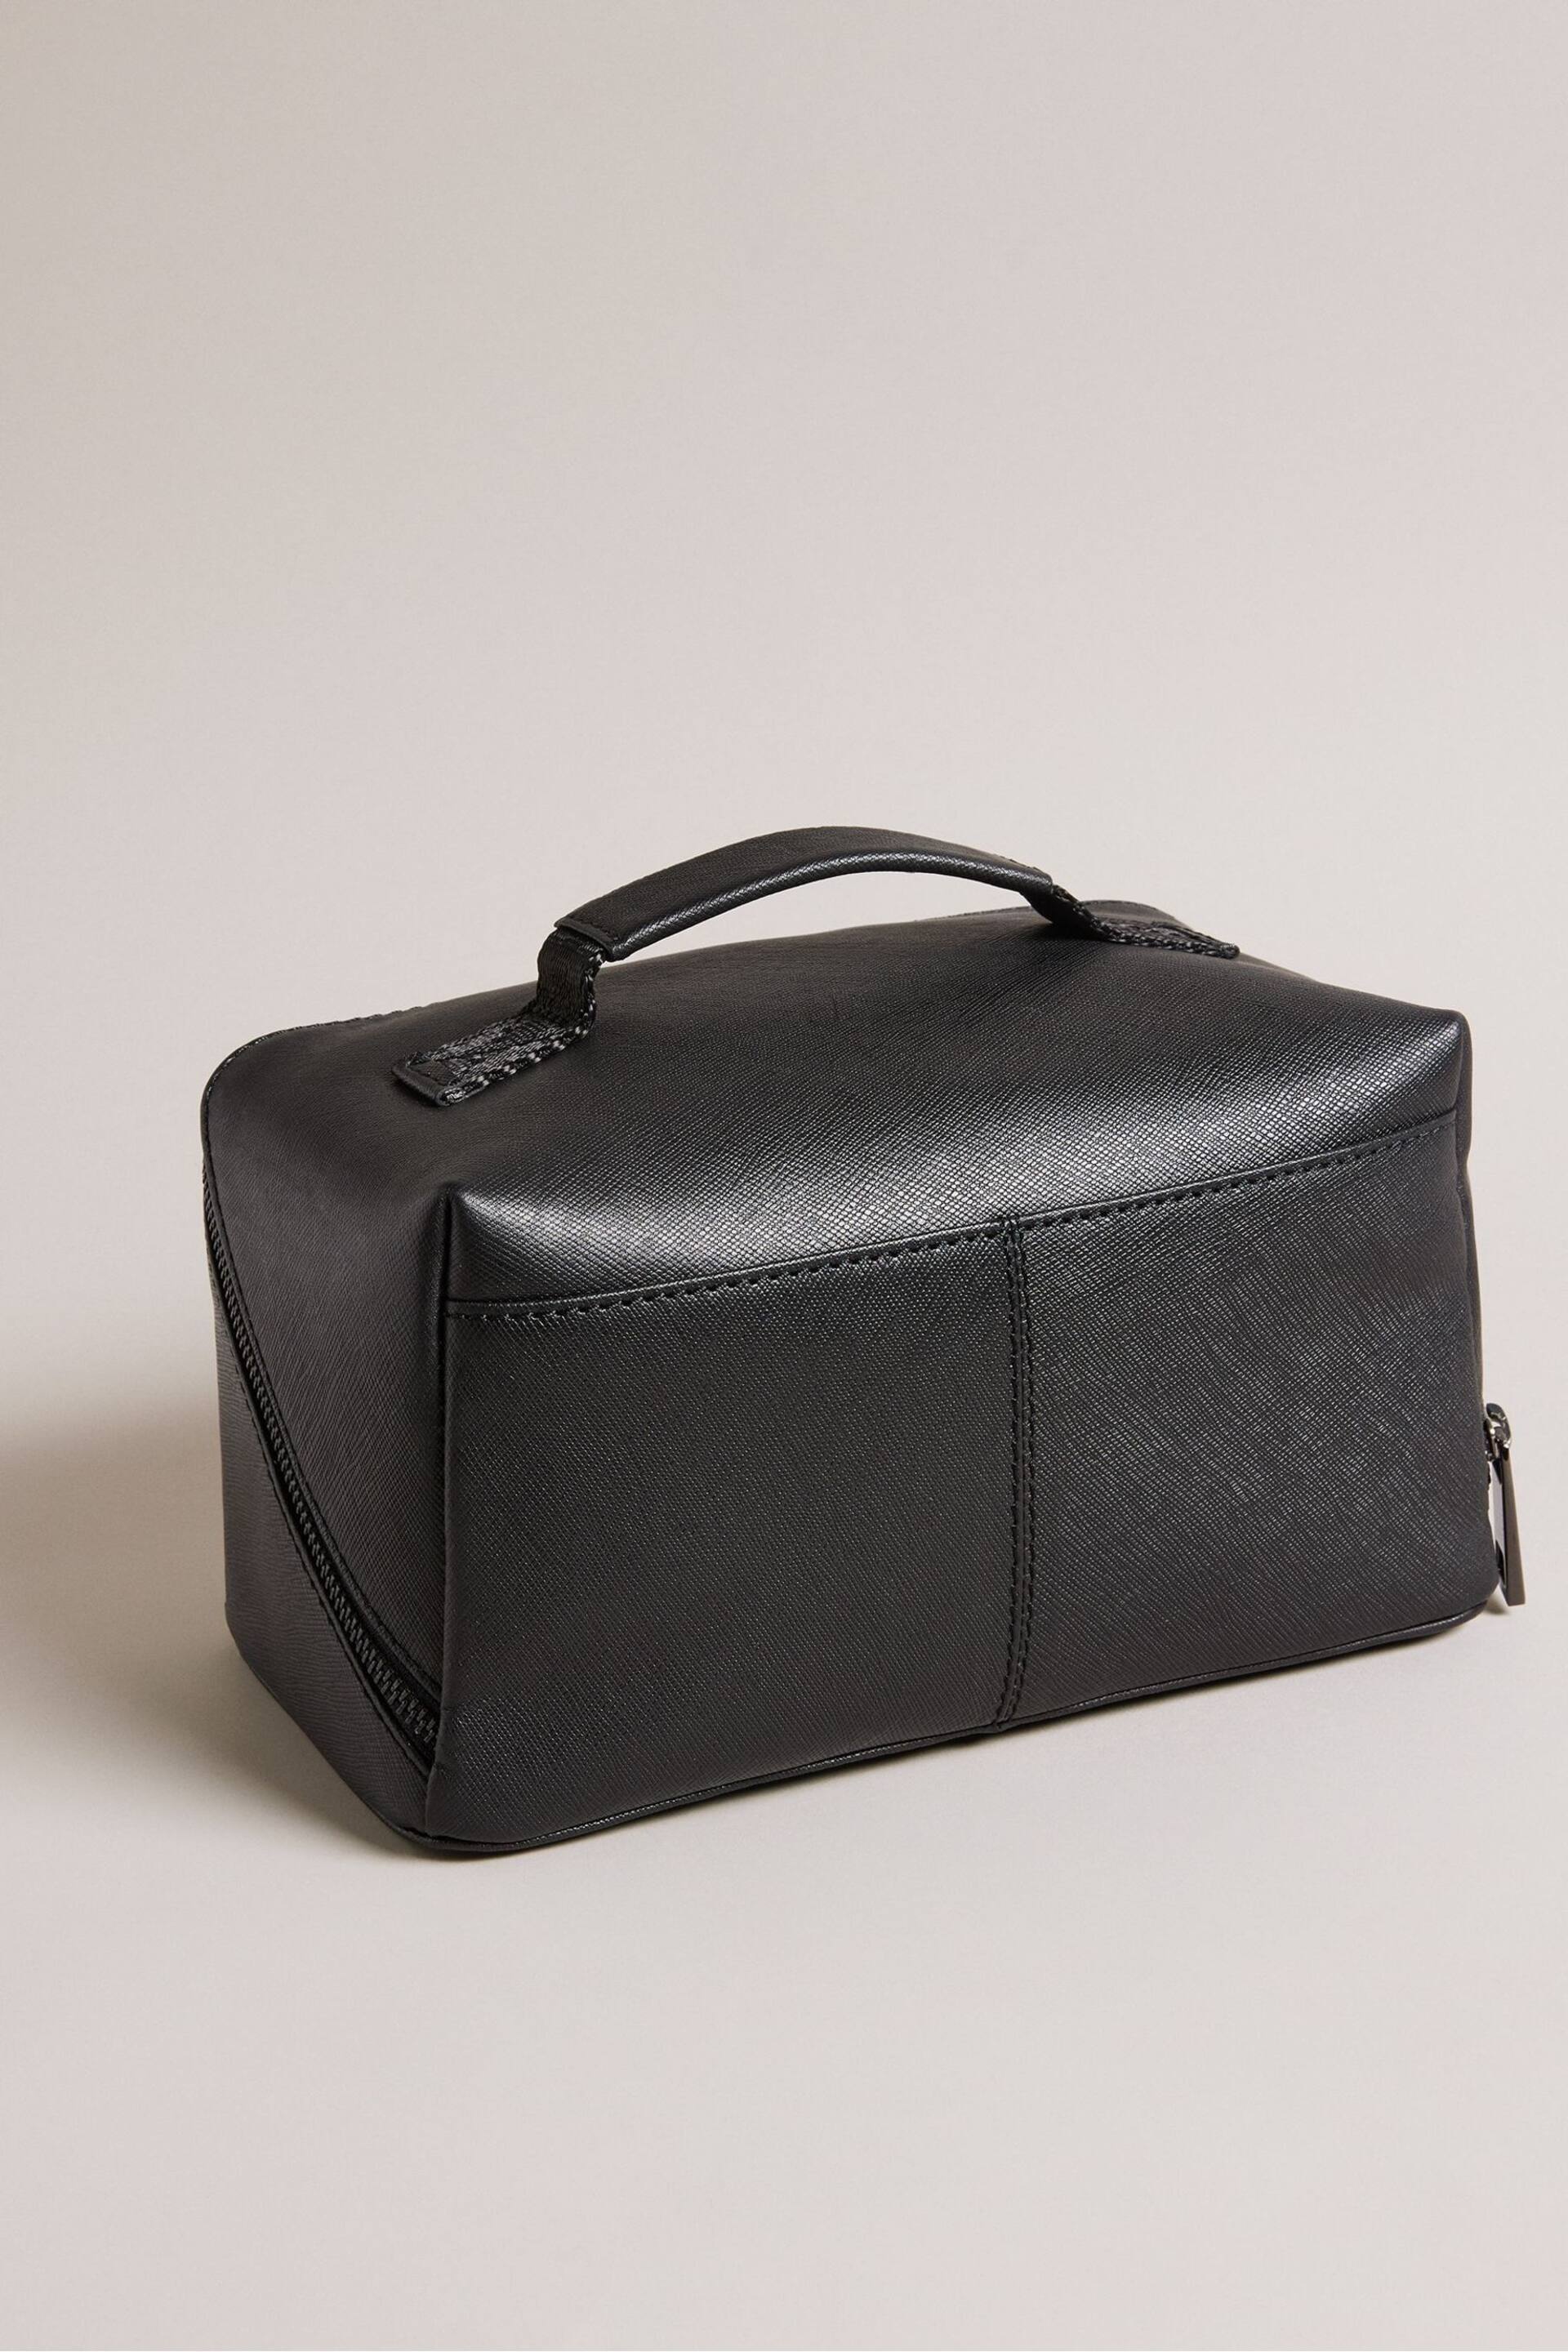 Ted Baker Black Saffiano Leather Hanss Washbag - Image 1 of 3